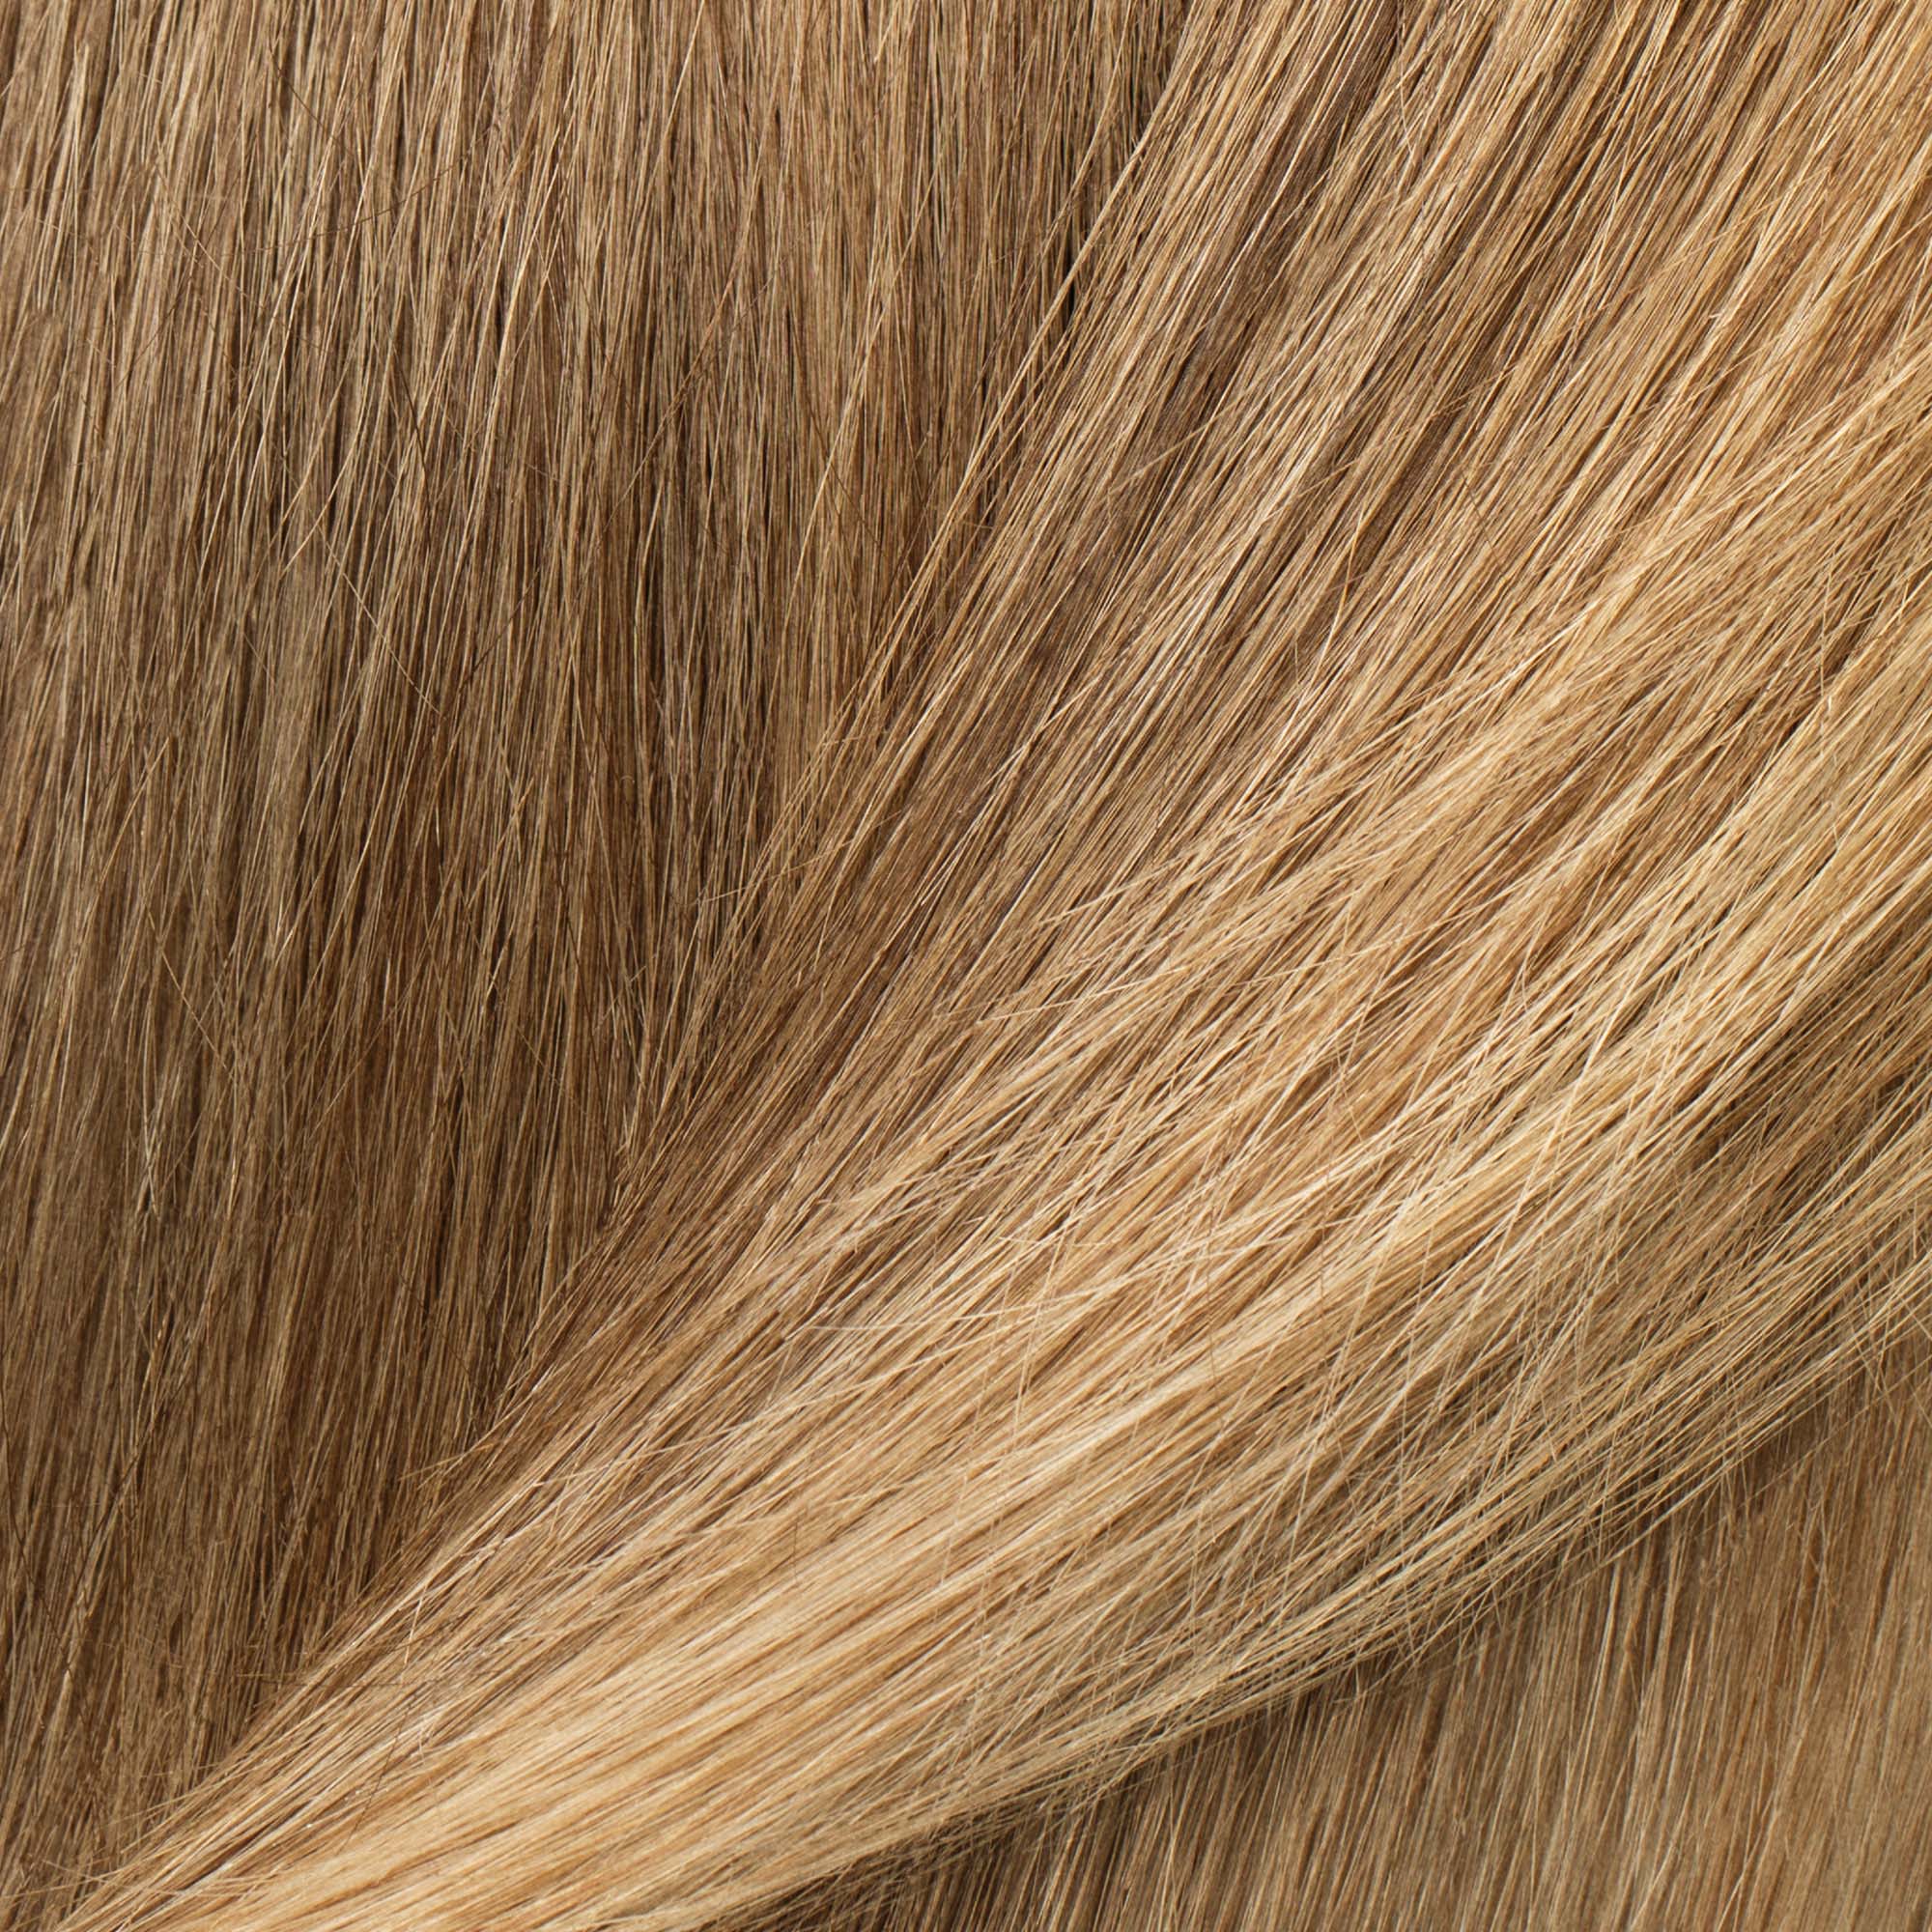 IGK Hair color testing 'Copper Cola' #founditon #haircolor